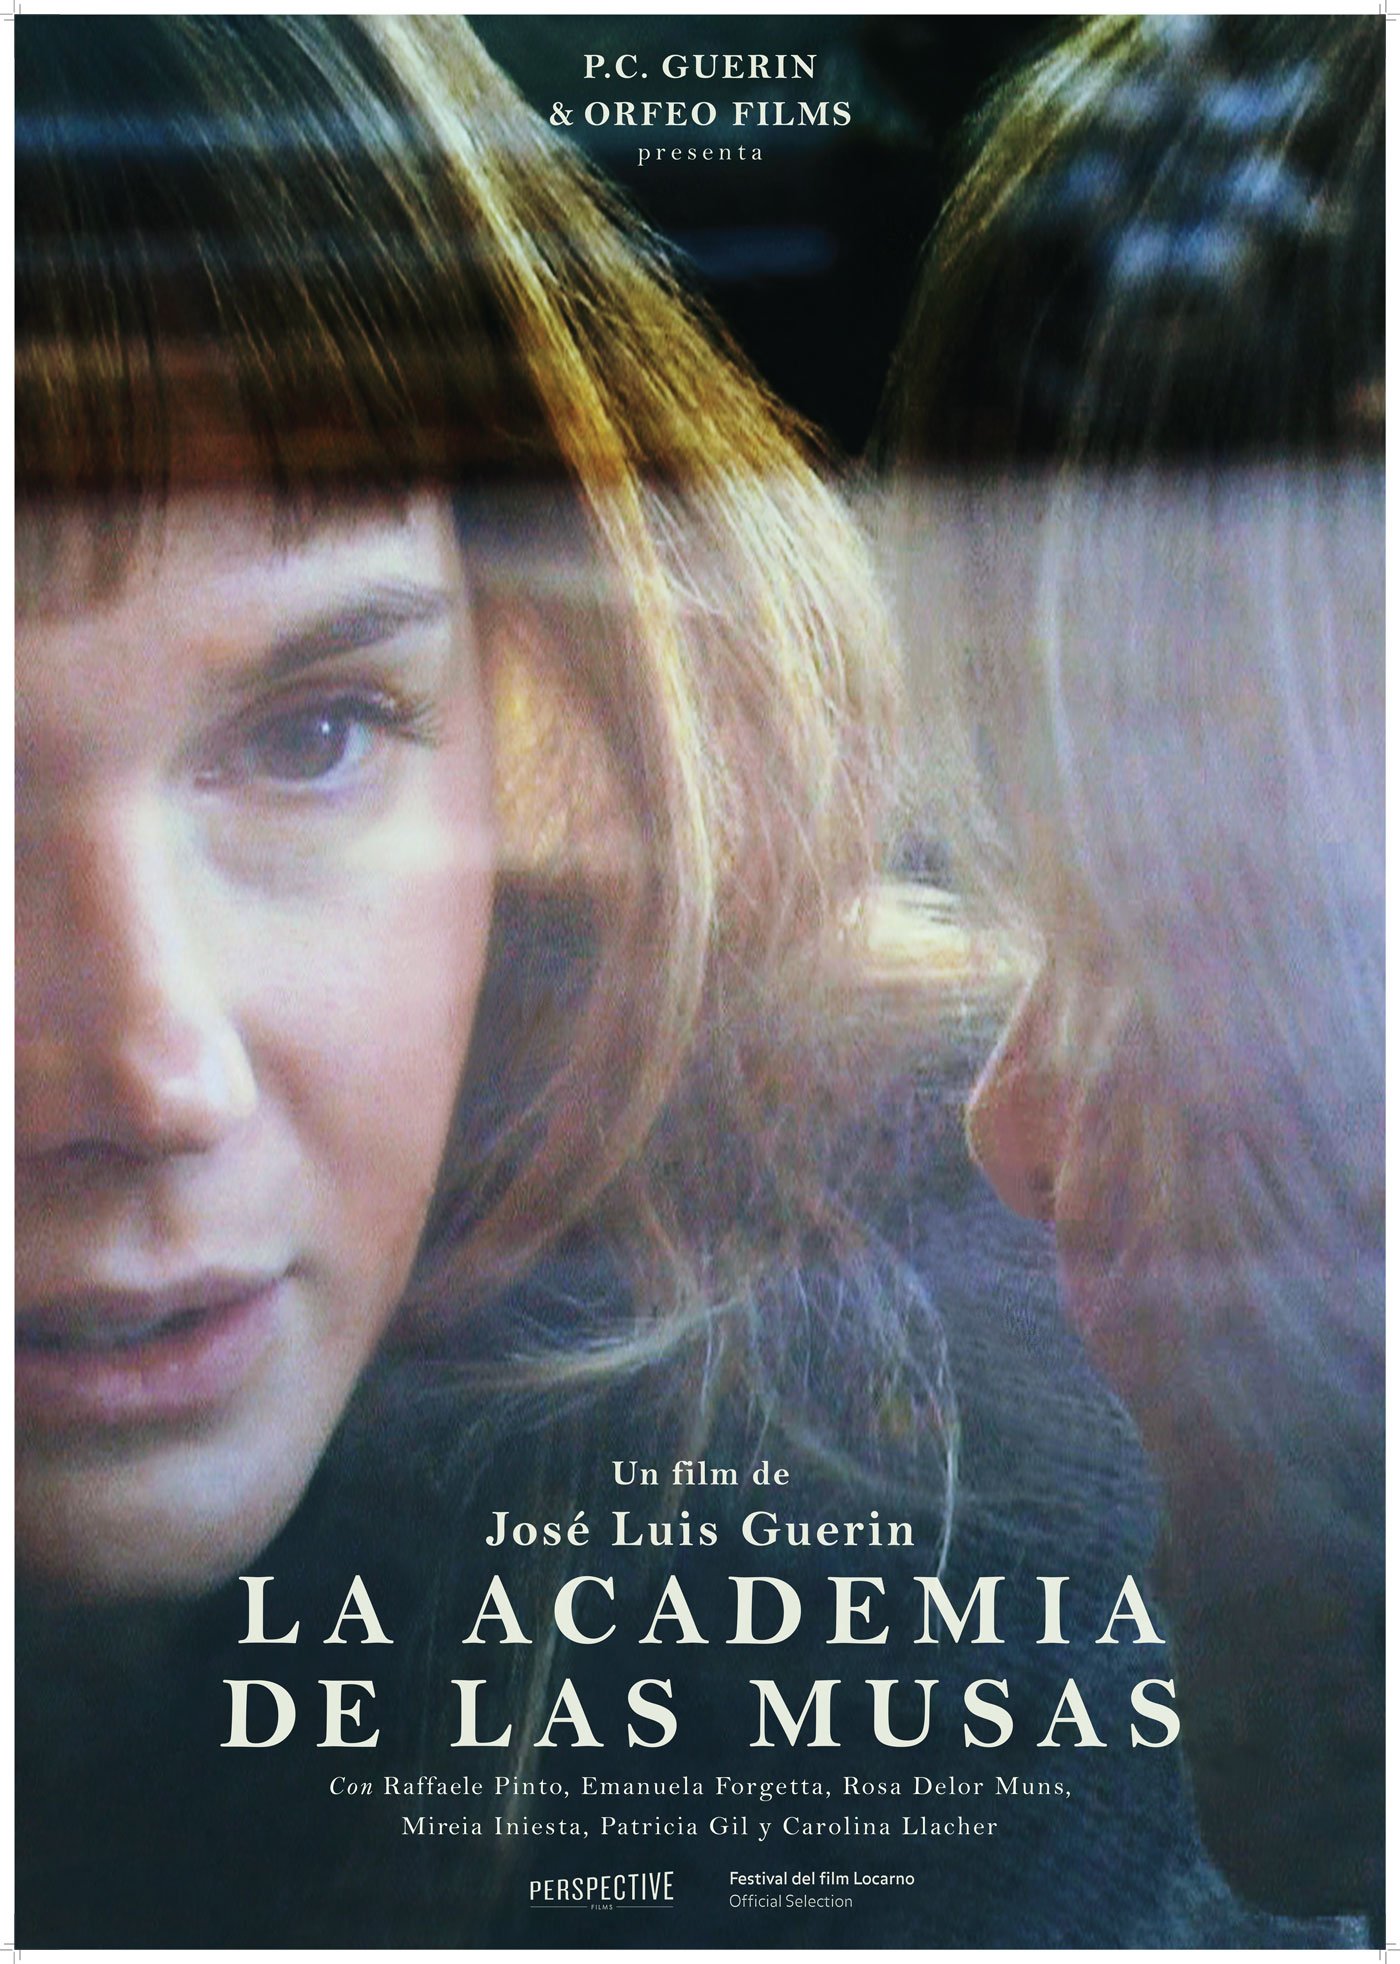 L'affiche originale du film La Academia de las musas en Catalan